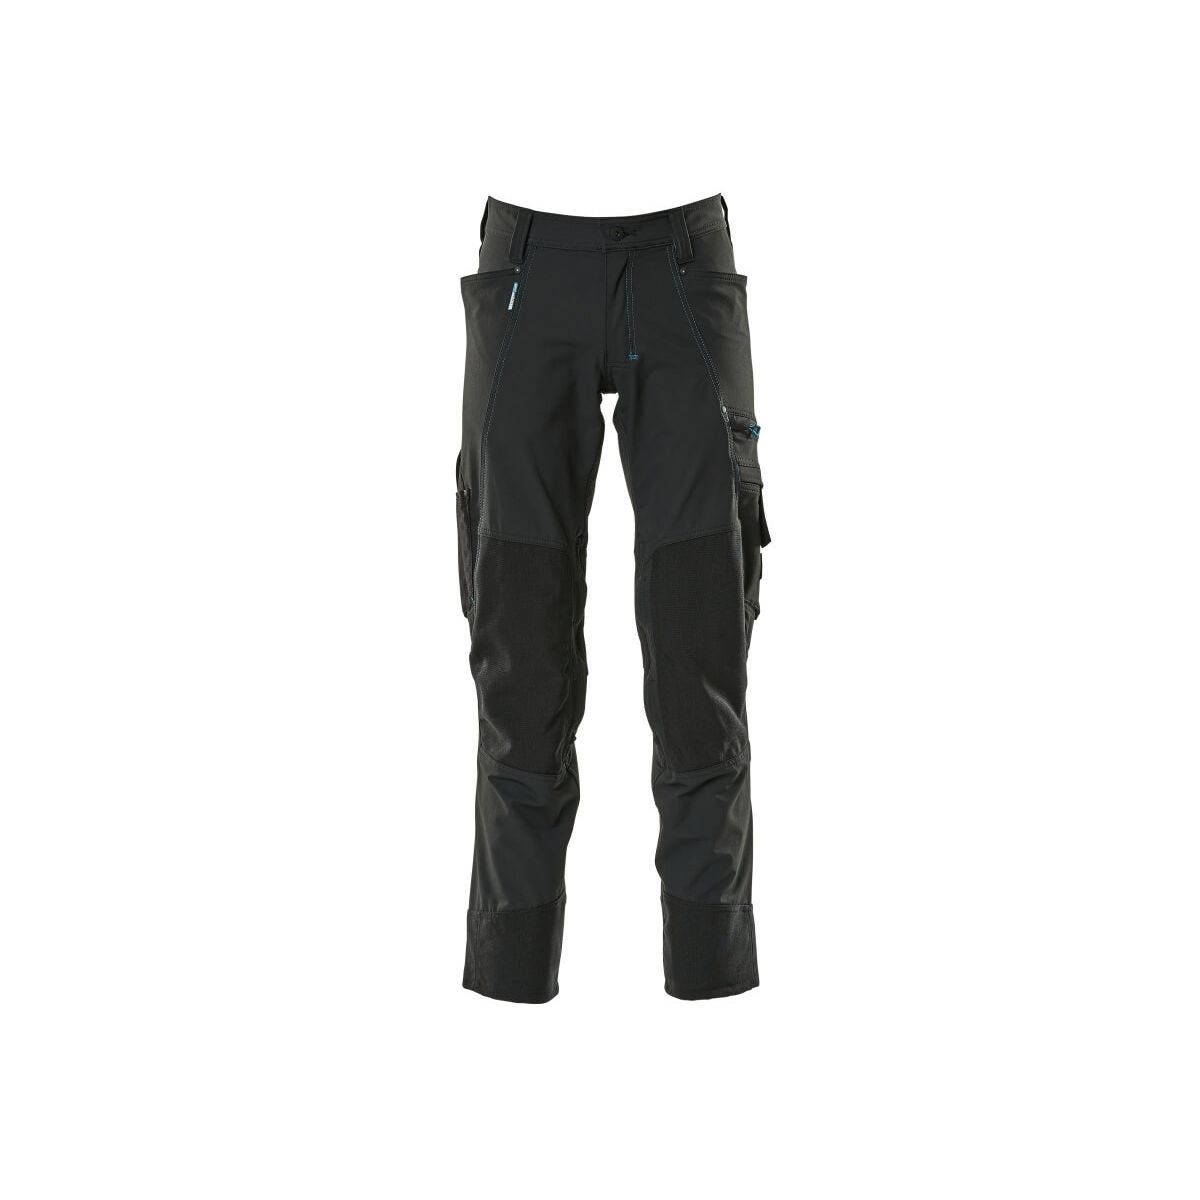 Pantalon avec poches genouillères ULTIMATE STRETCH Noir - Mascot - Taille W34.5/L32 0